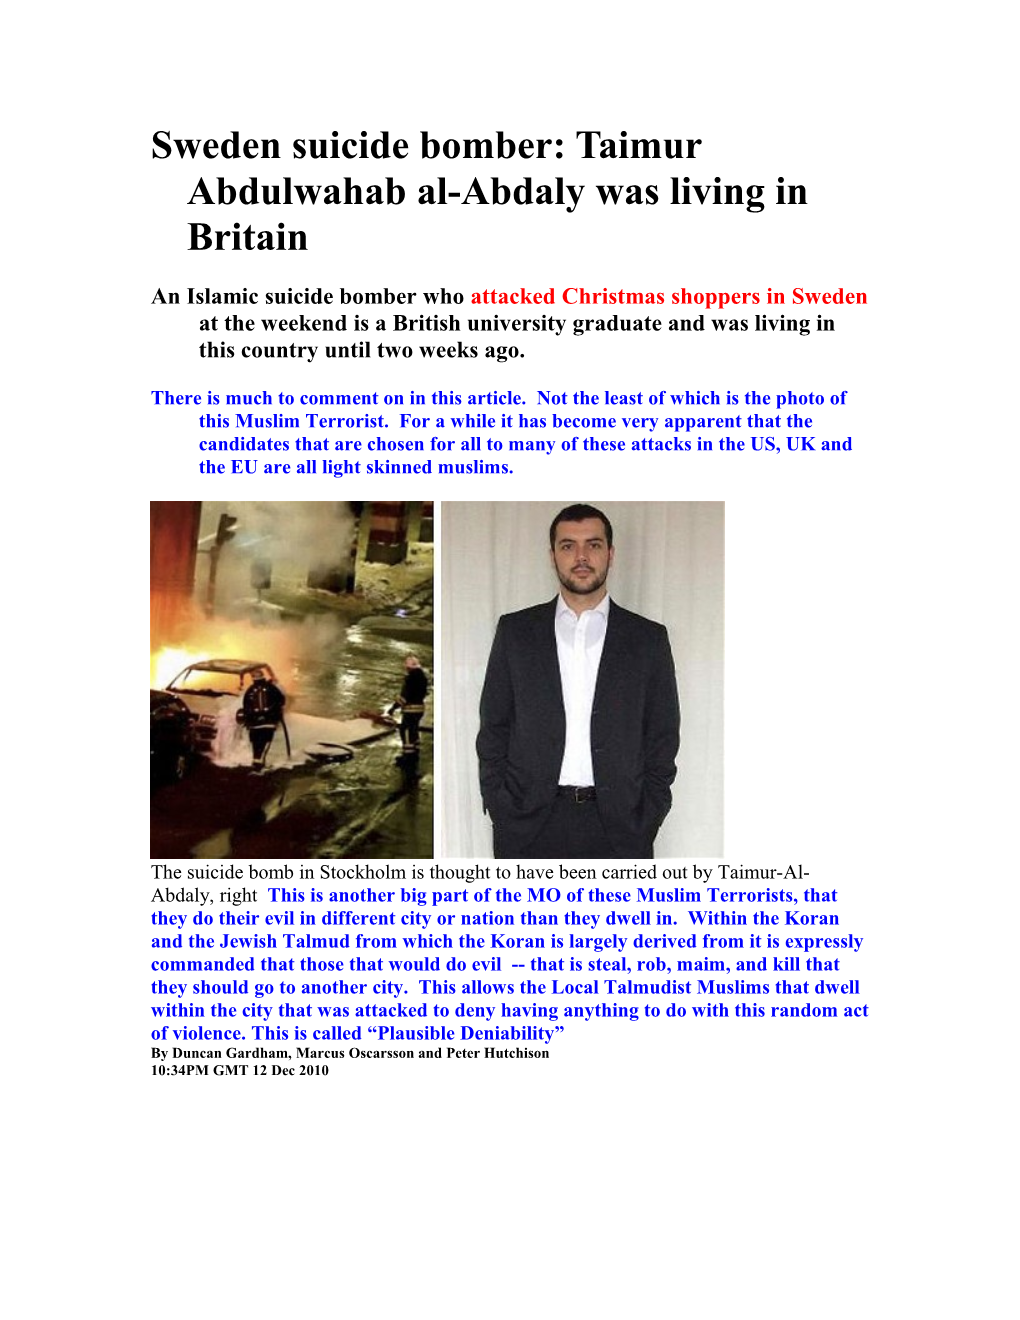 Sweden Suicide Bomber: Taimur Abdulwahab Al-Abdaly Was Living in Britain